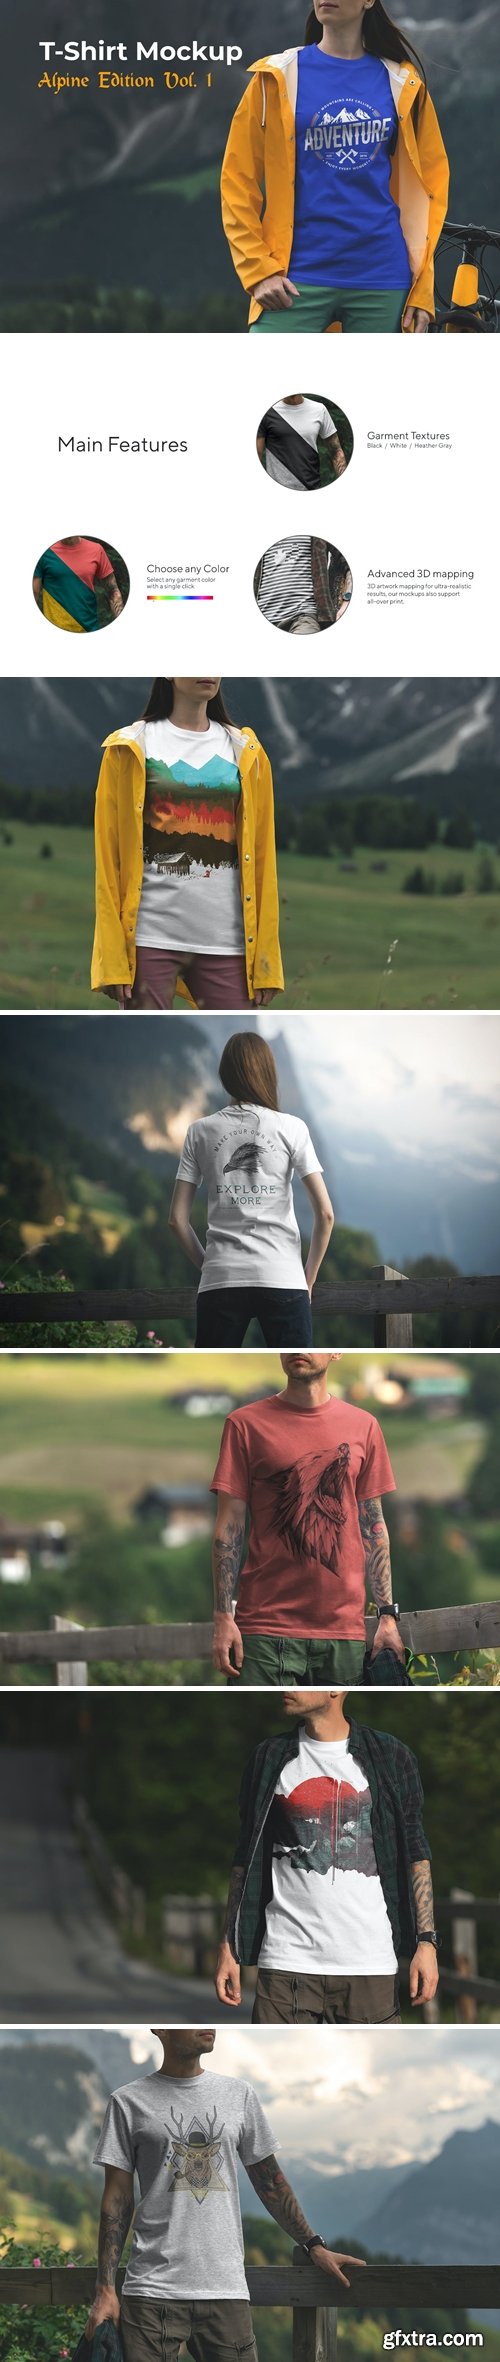 T-Shirt Mockup Alpine Edition Vol. 1